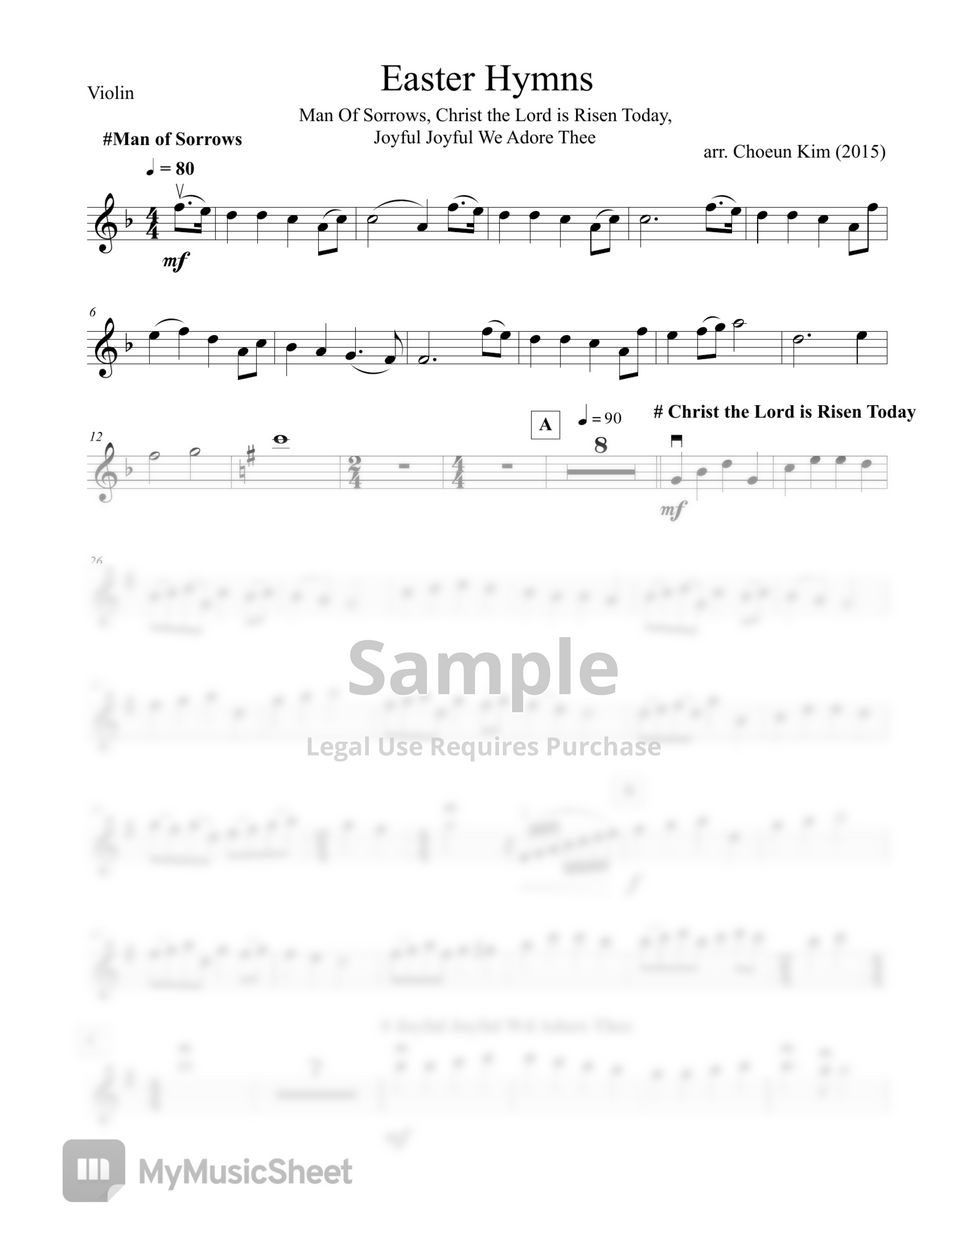 Hymn - Easter Hymns Medley (Piano Quartet) by Music Cho